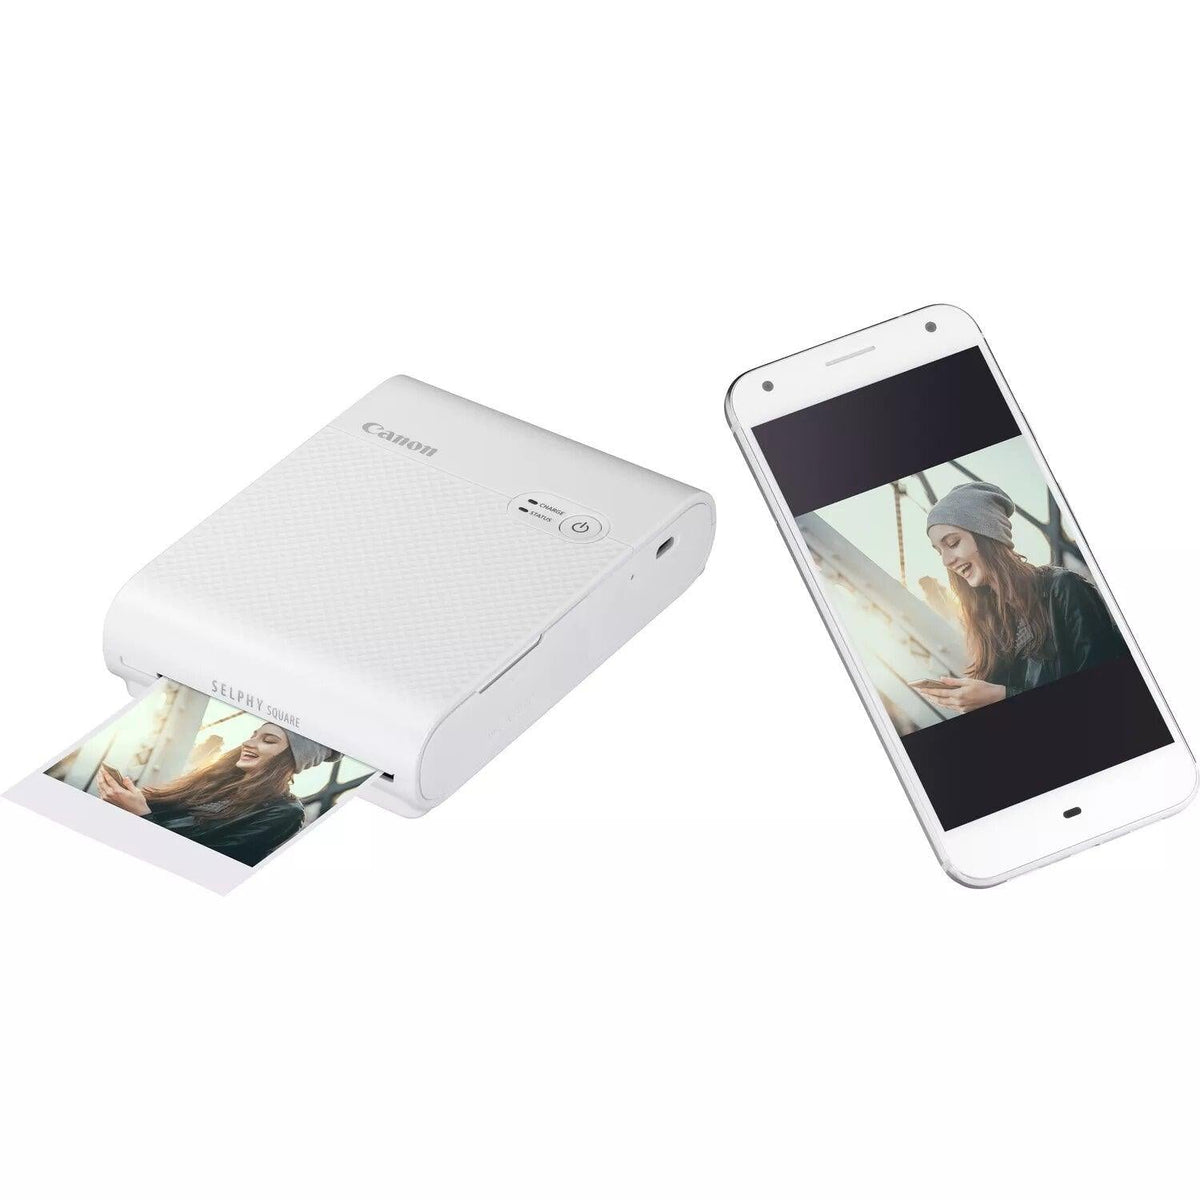 Canon Selphy Square QX10  Wireless Compact Photo Printer - White | 4108C003 (7317833121980)